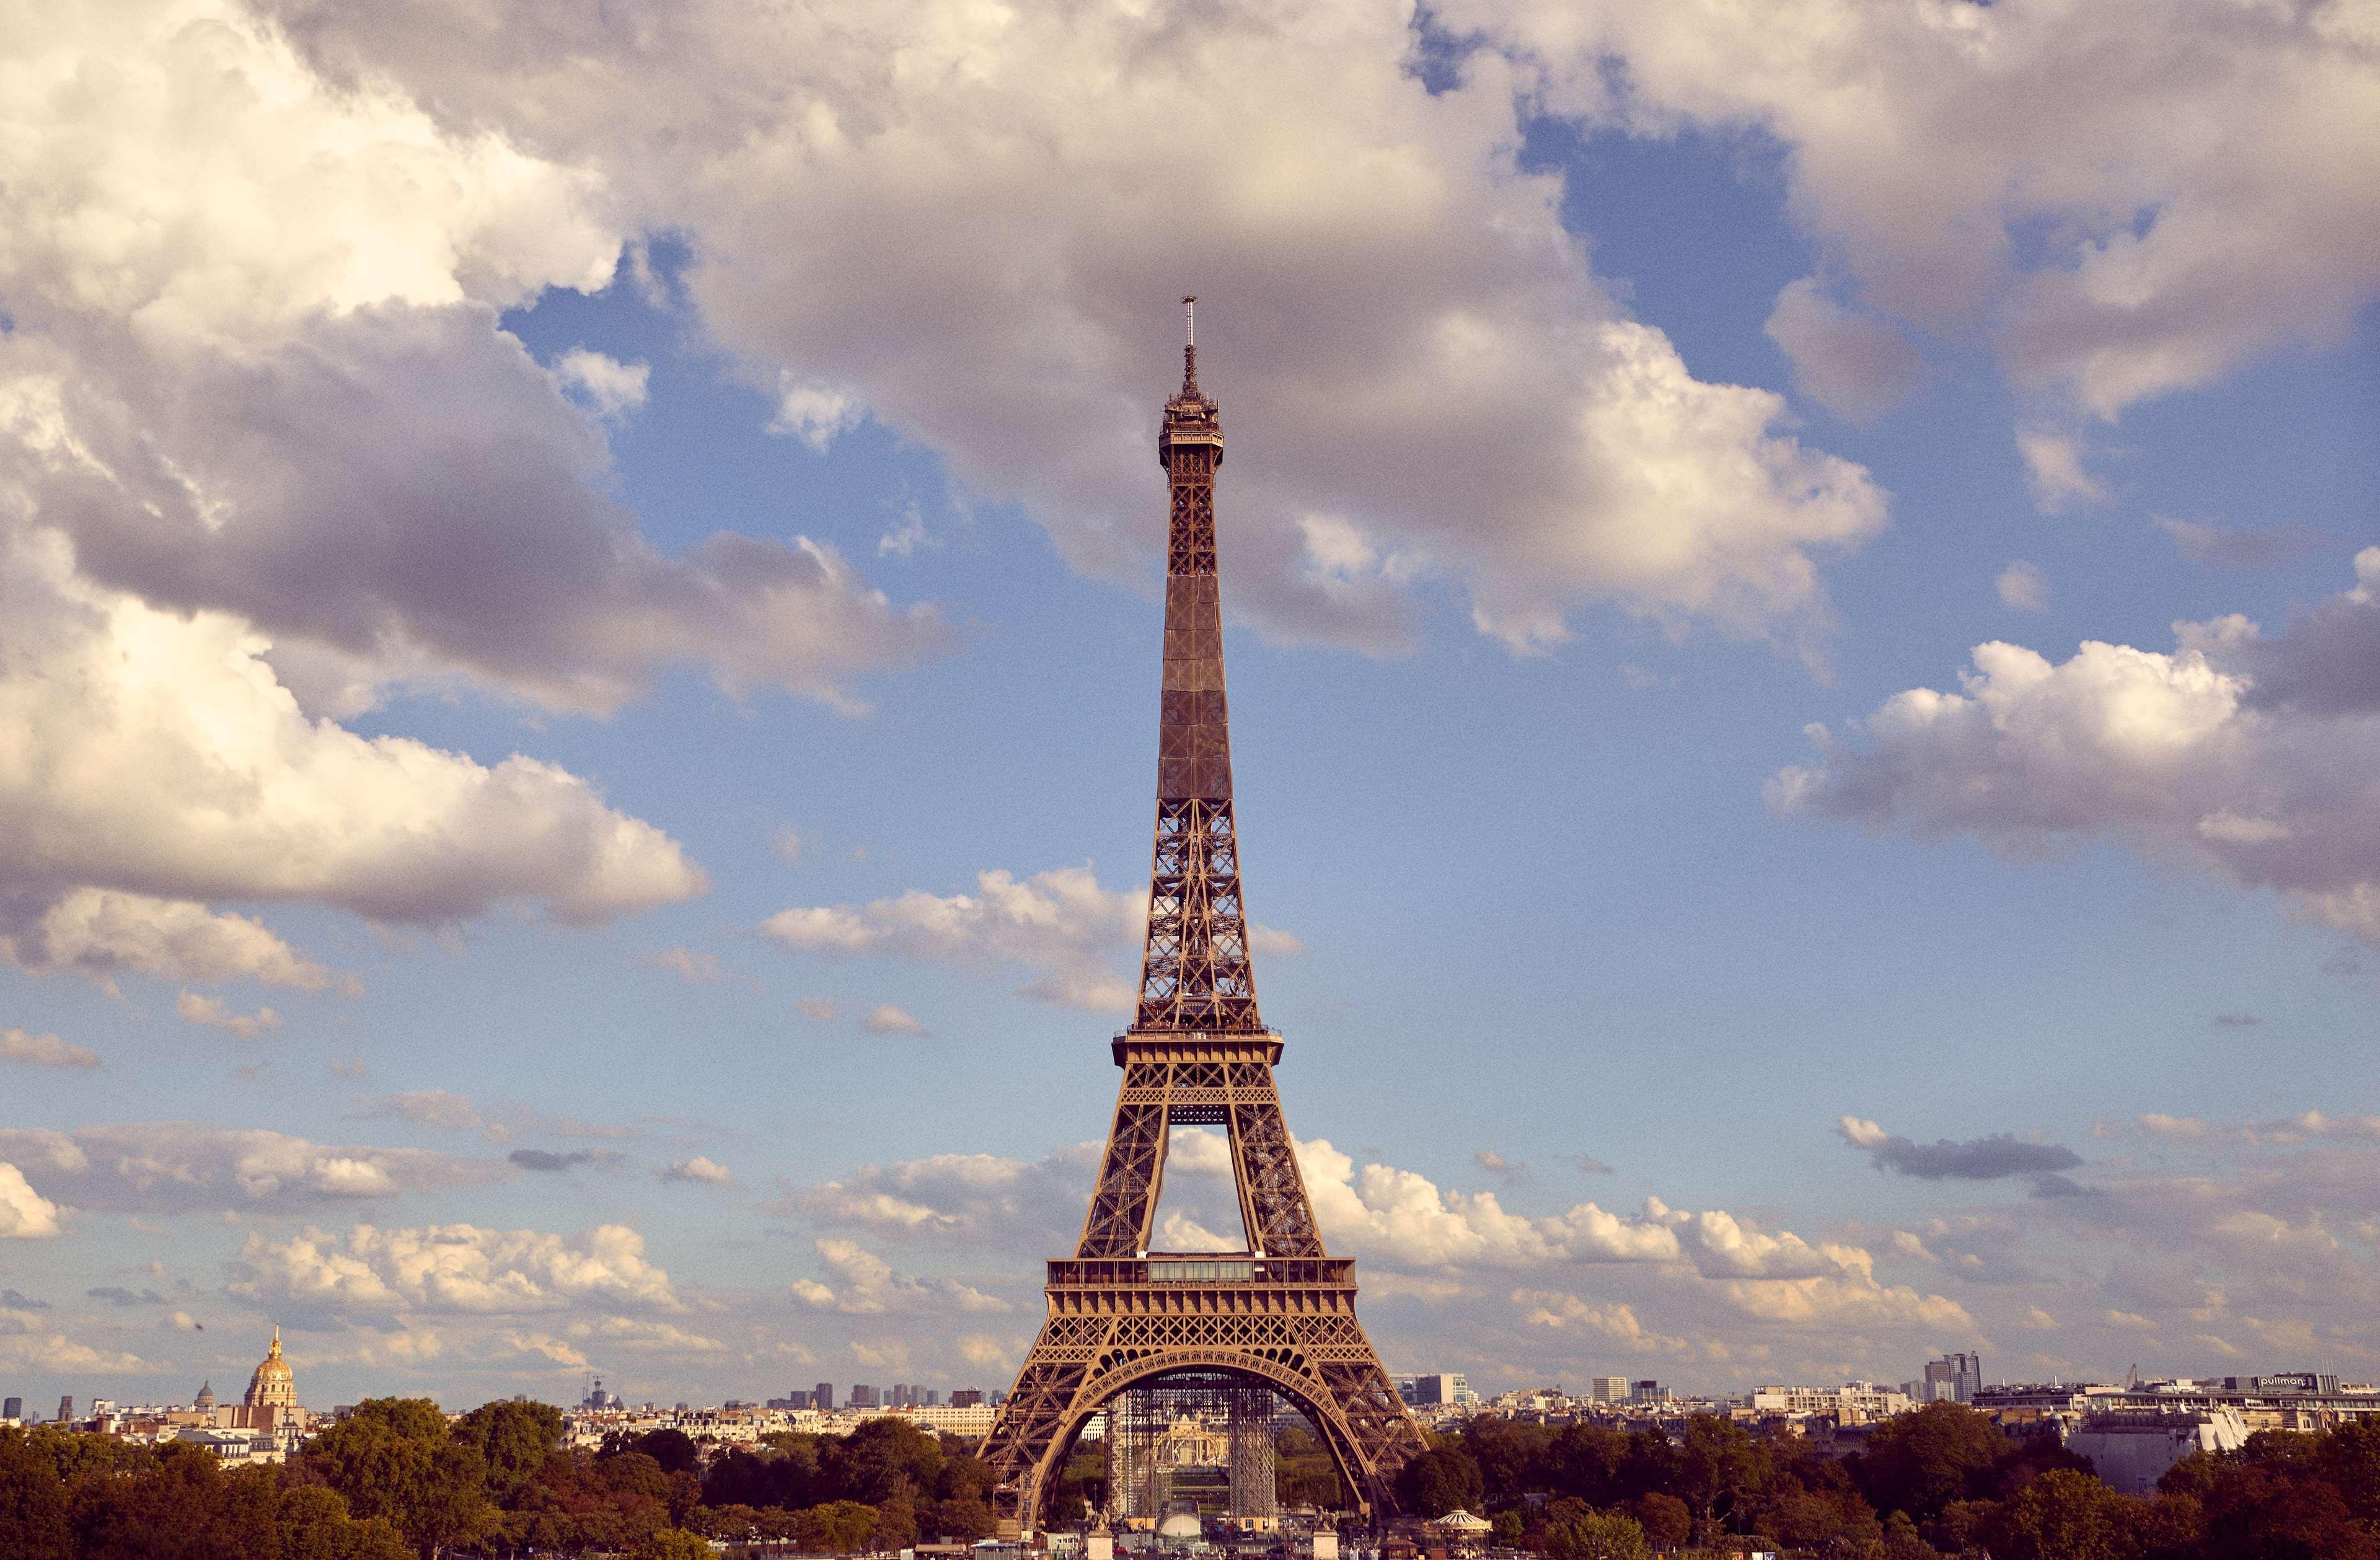 Plaza Tour Eiffel Hotel Paris Luaran gambar